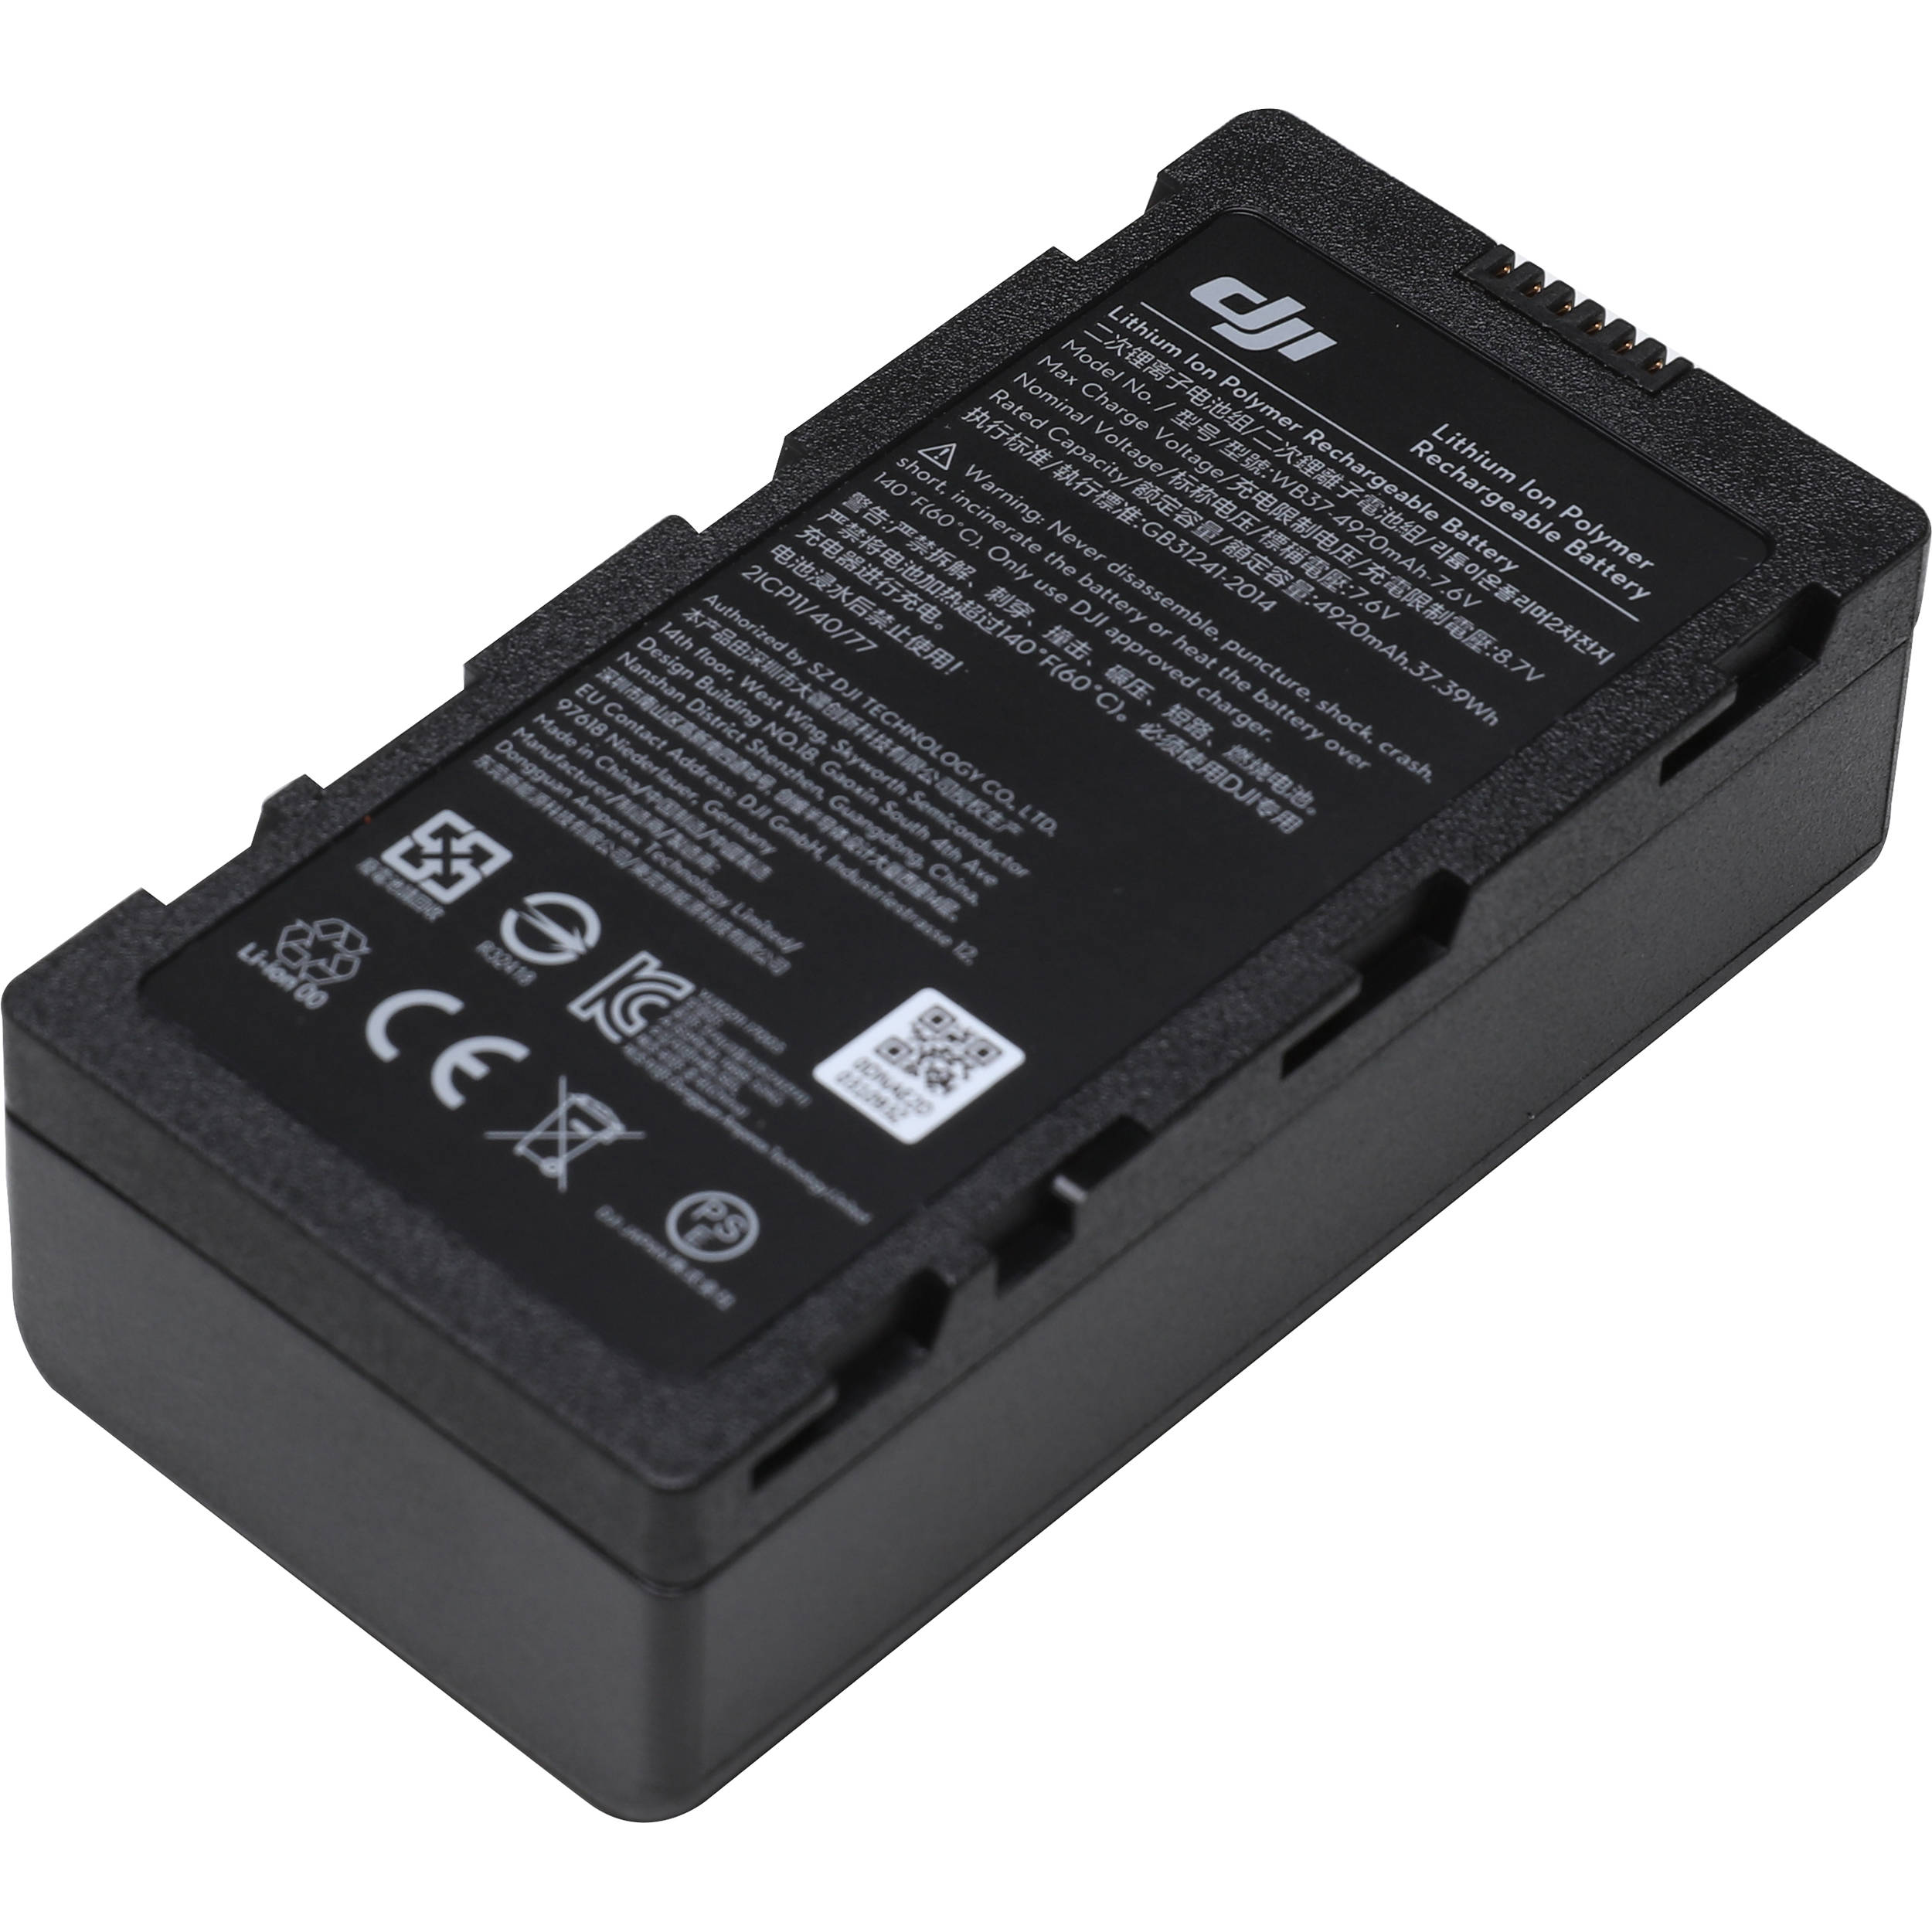 DJI Inspire WB37 Intelligent Battery